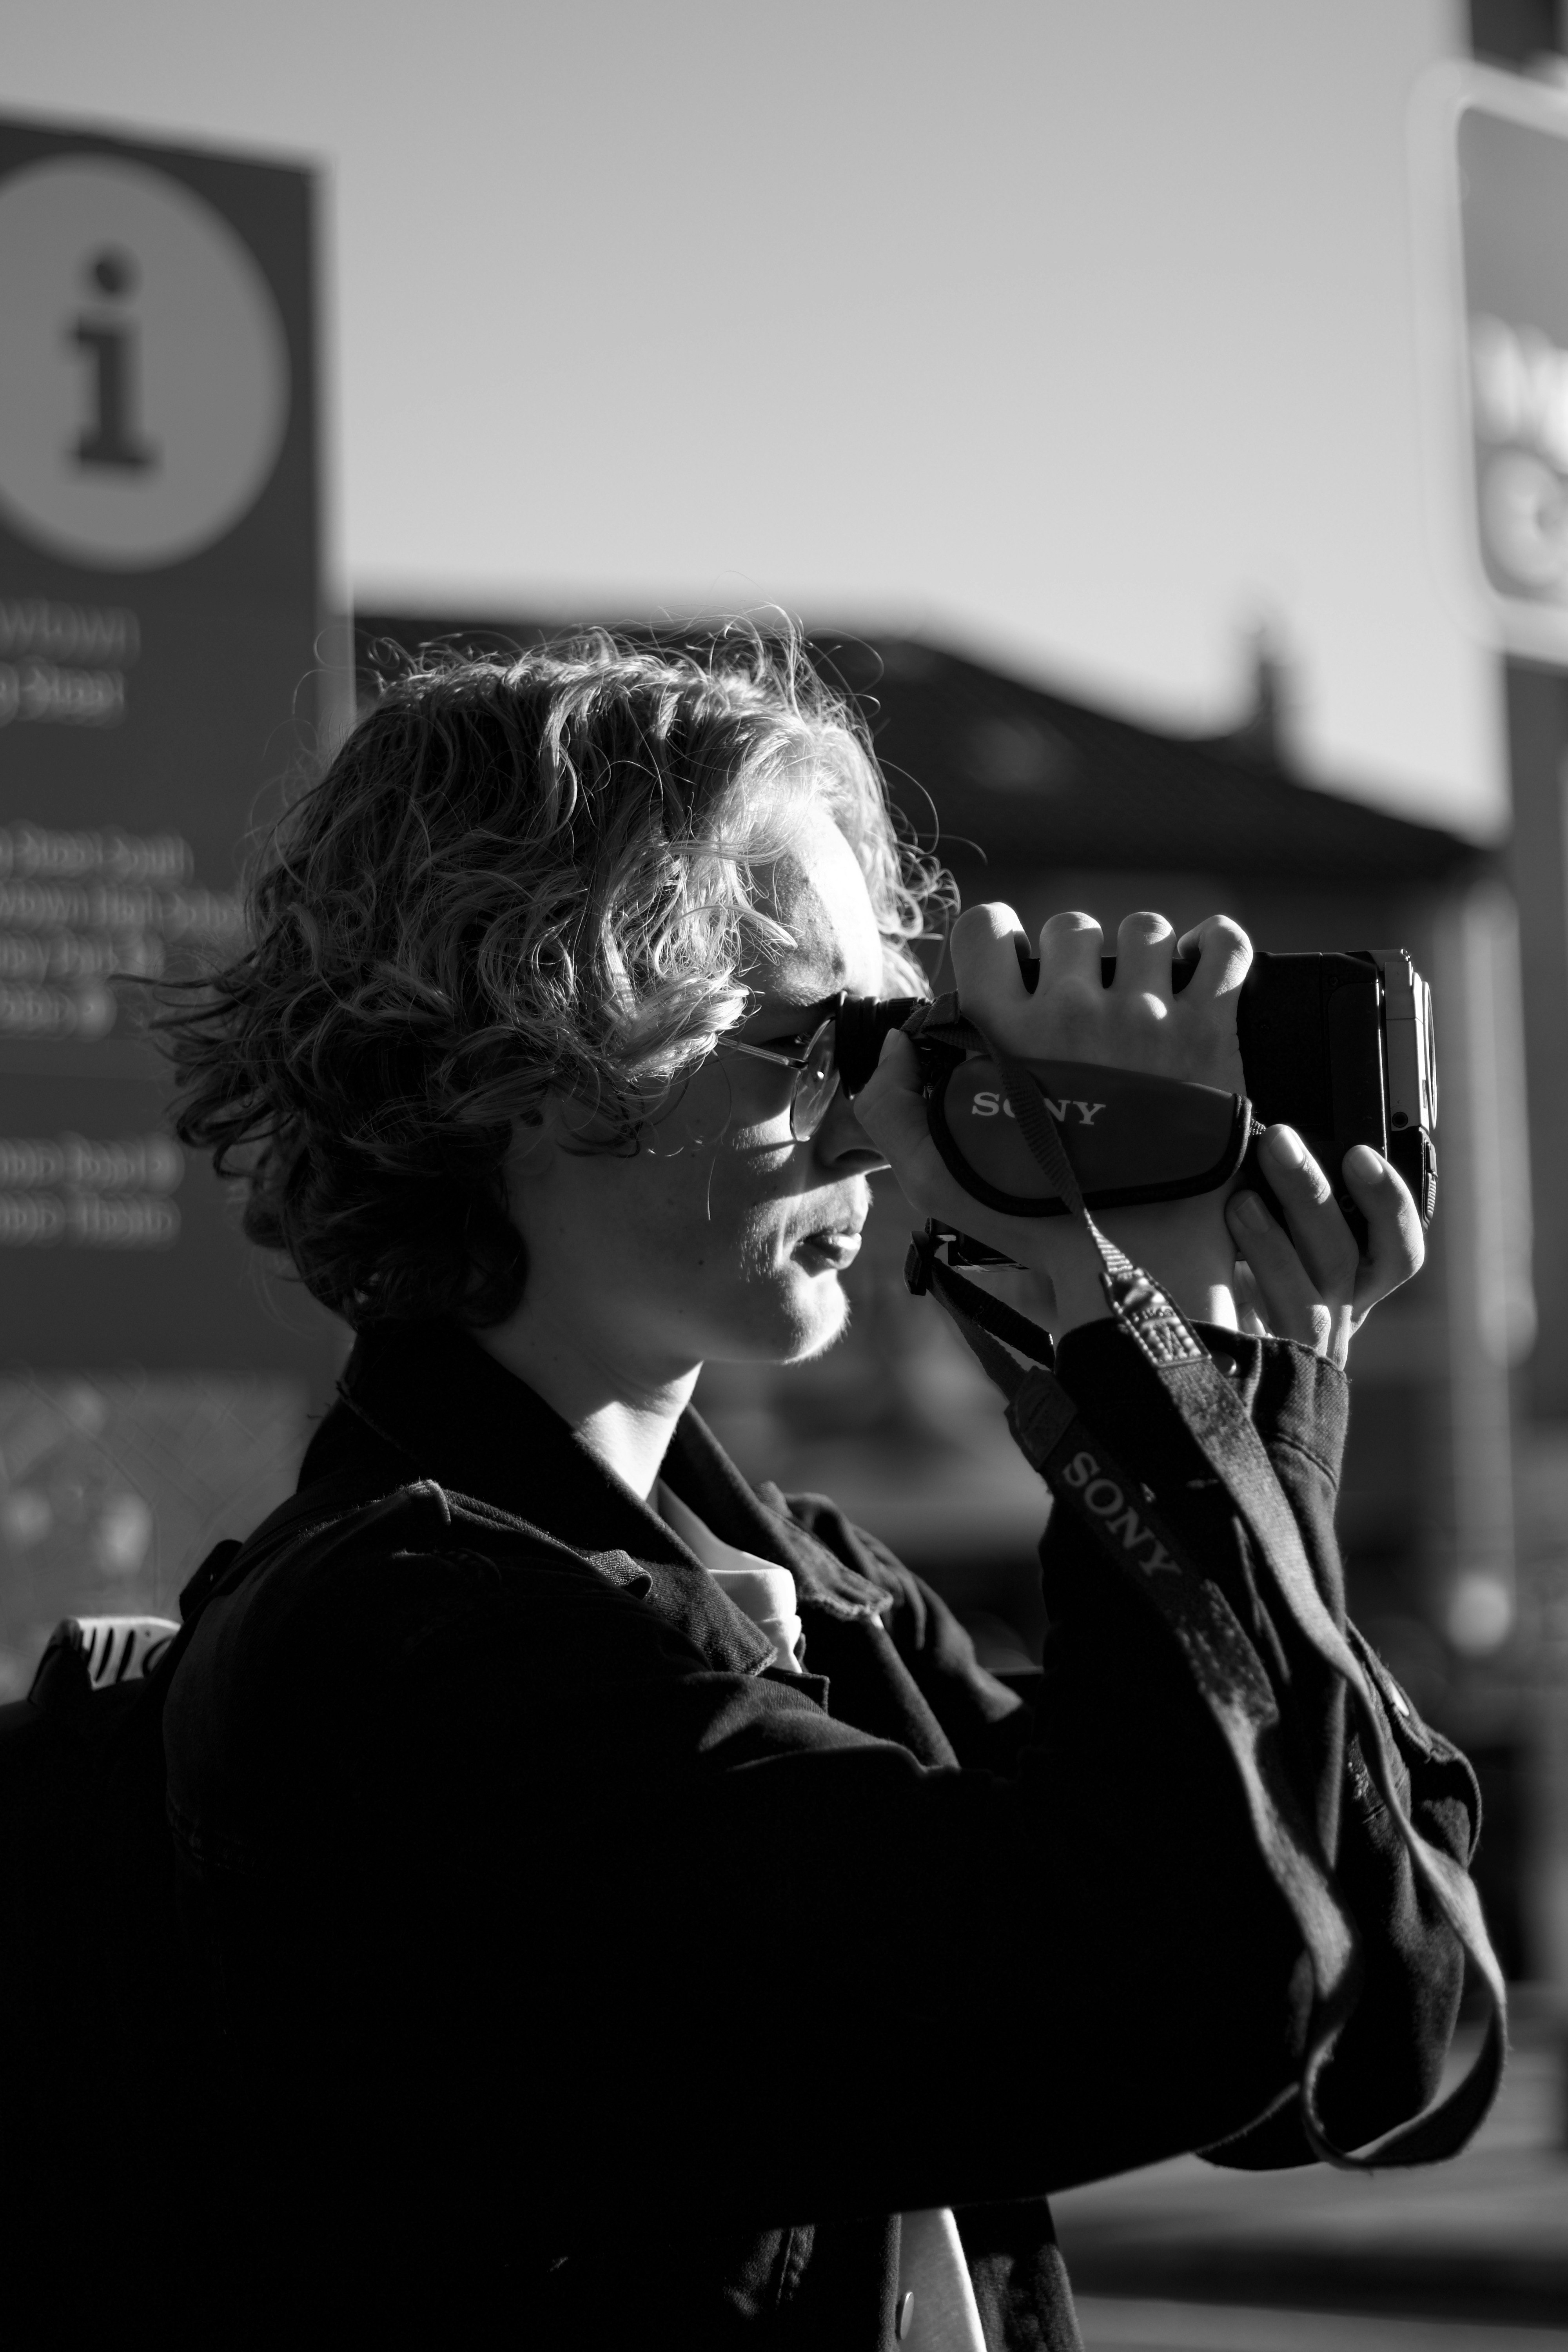 grayscale photo of woman wearing sunglasses